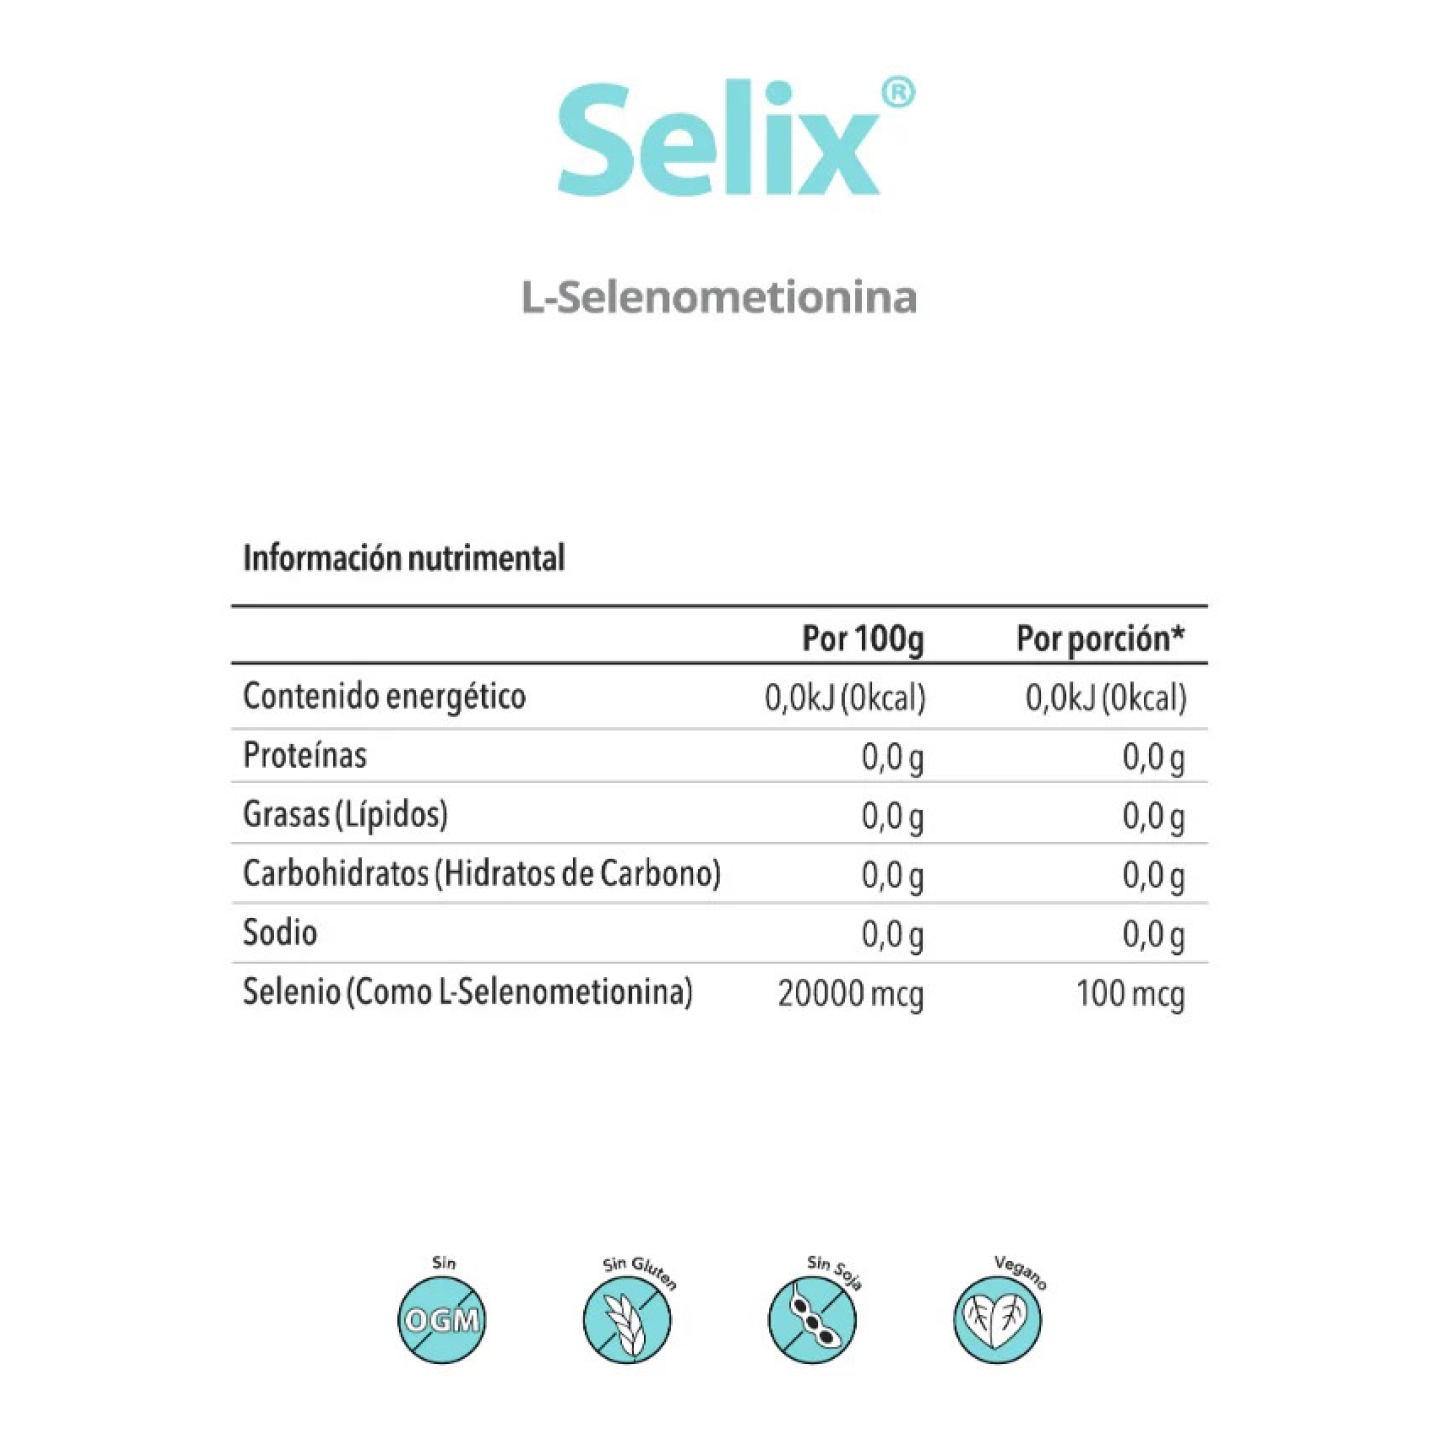 Selix L-Selenometionina